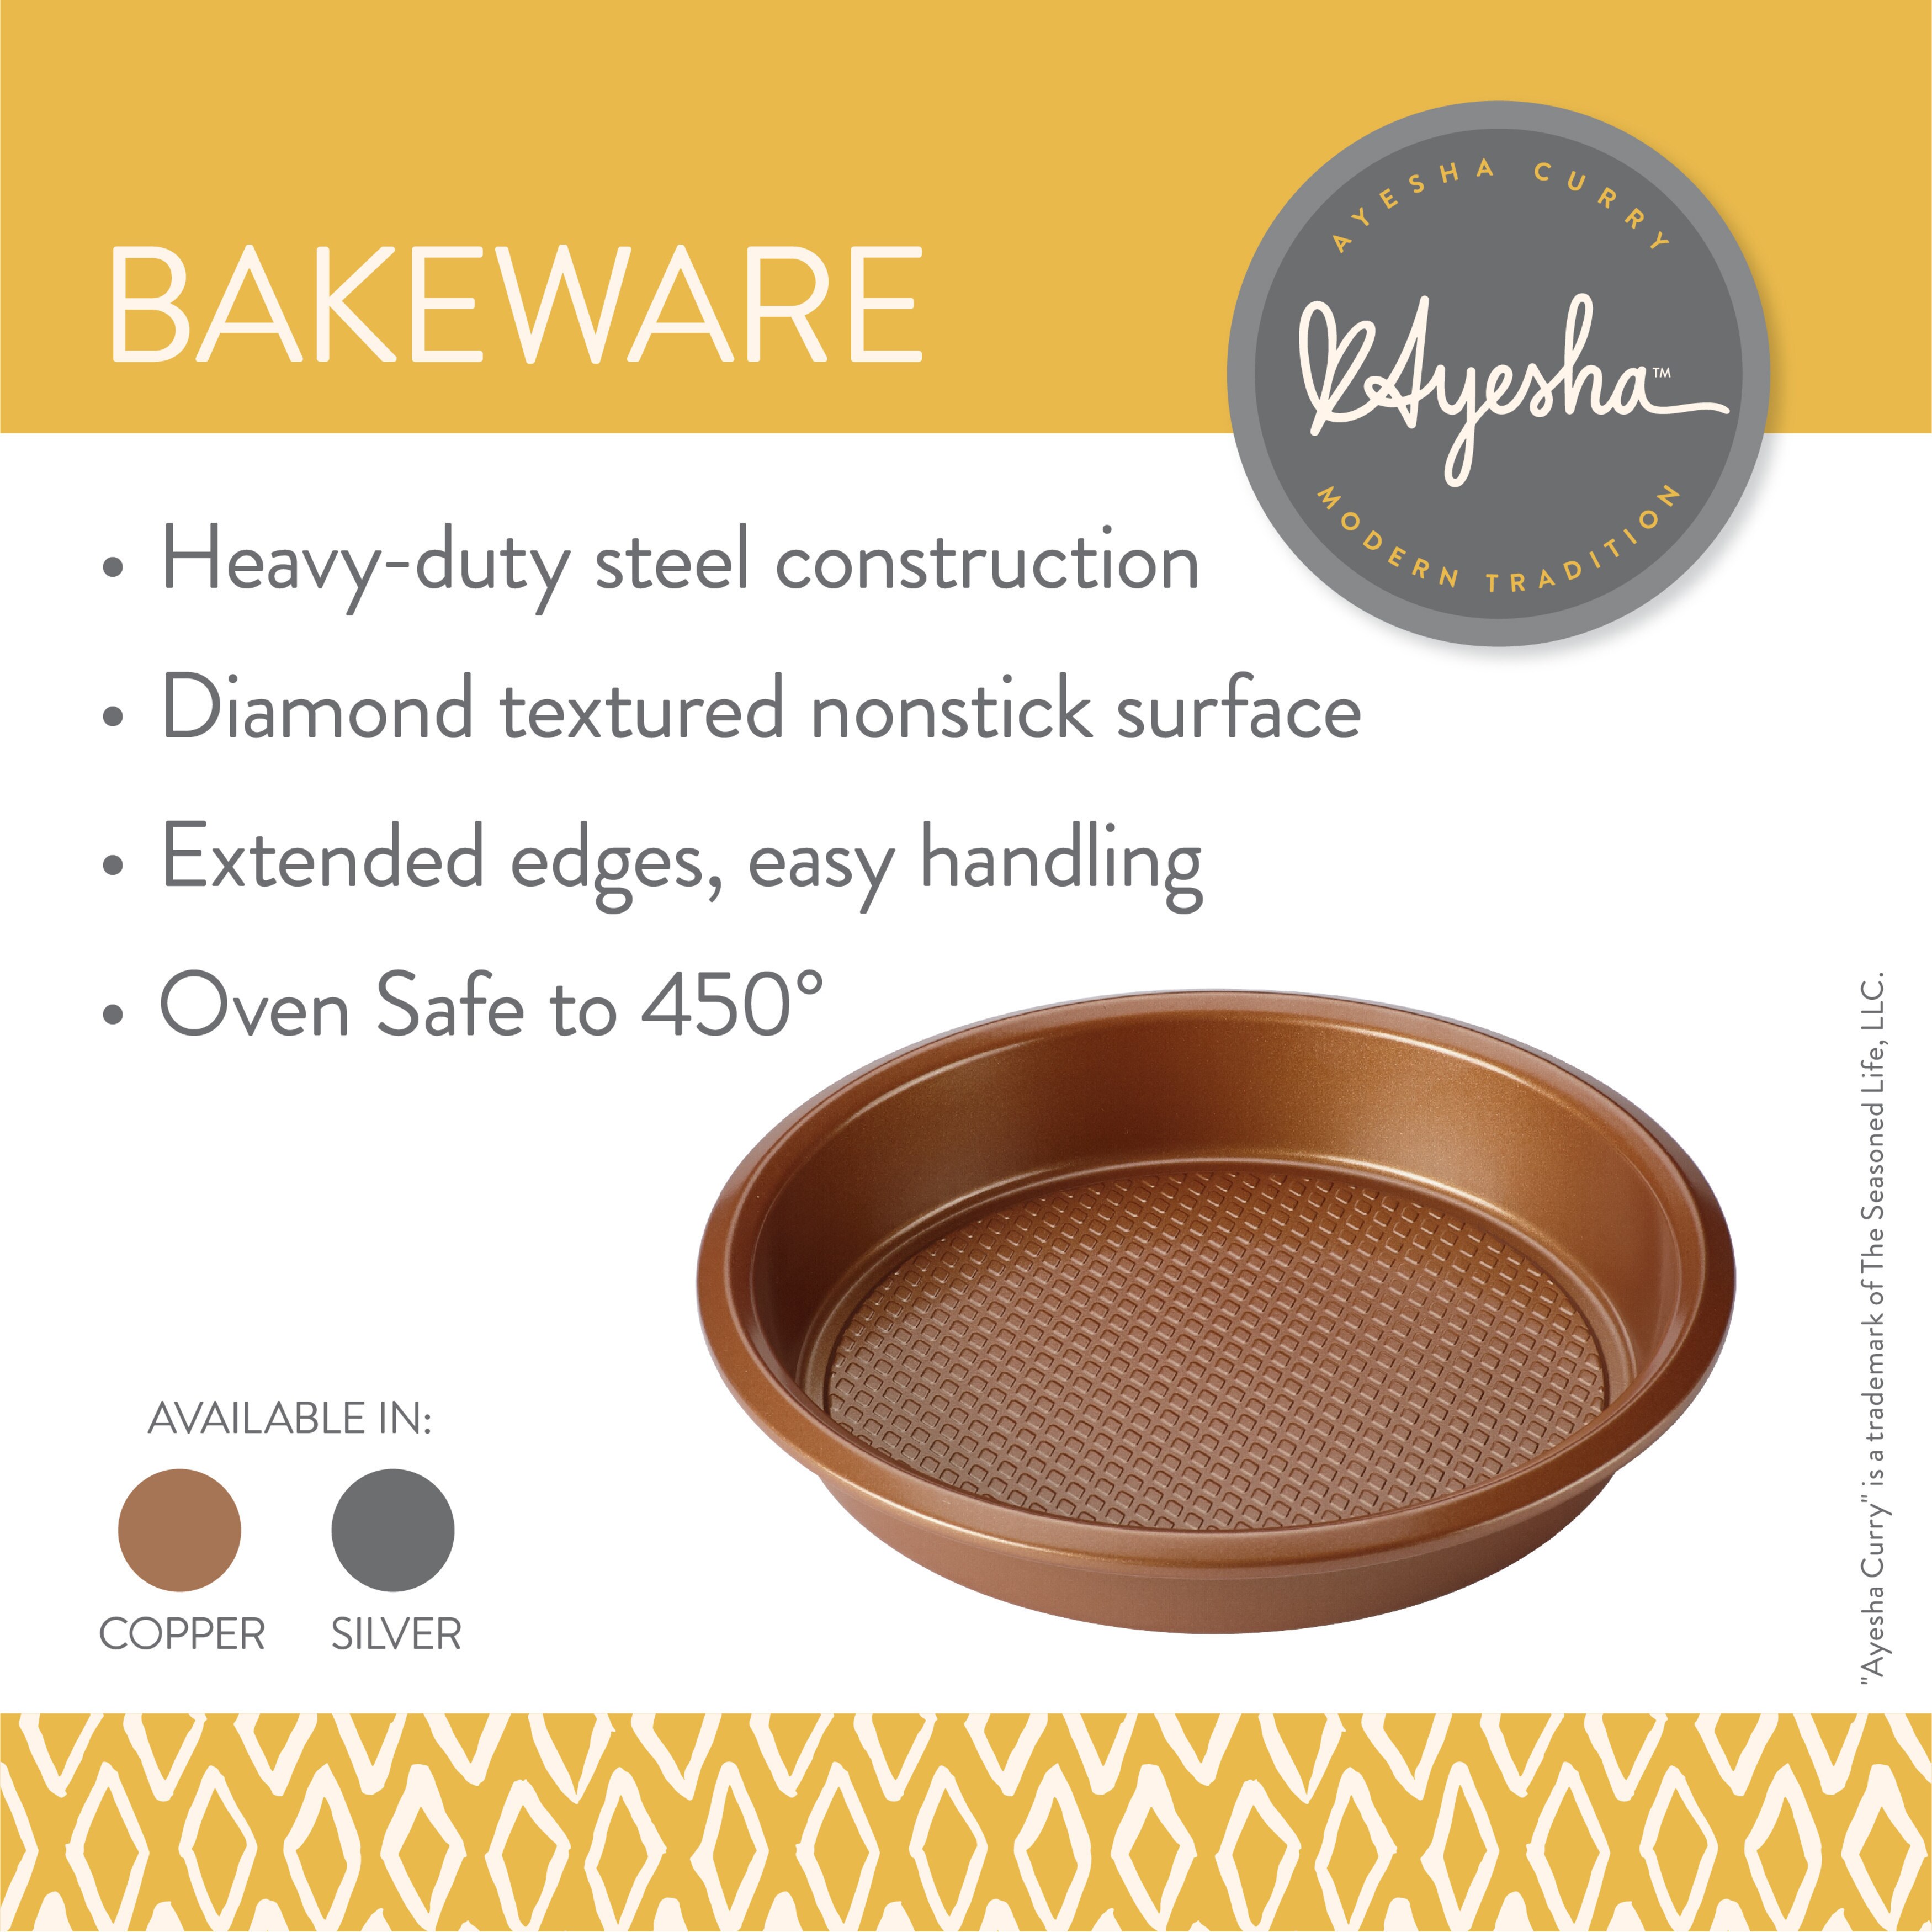 Circulon Bakeware Nonstick Round Cake Pan, 9-Inch, Chocolate Brown